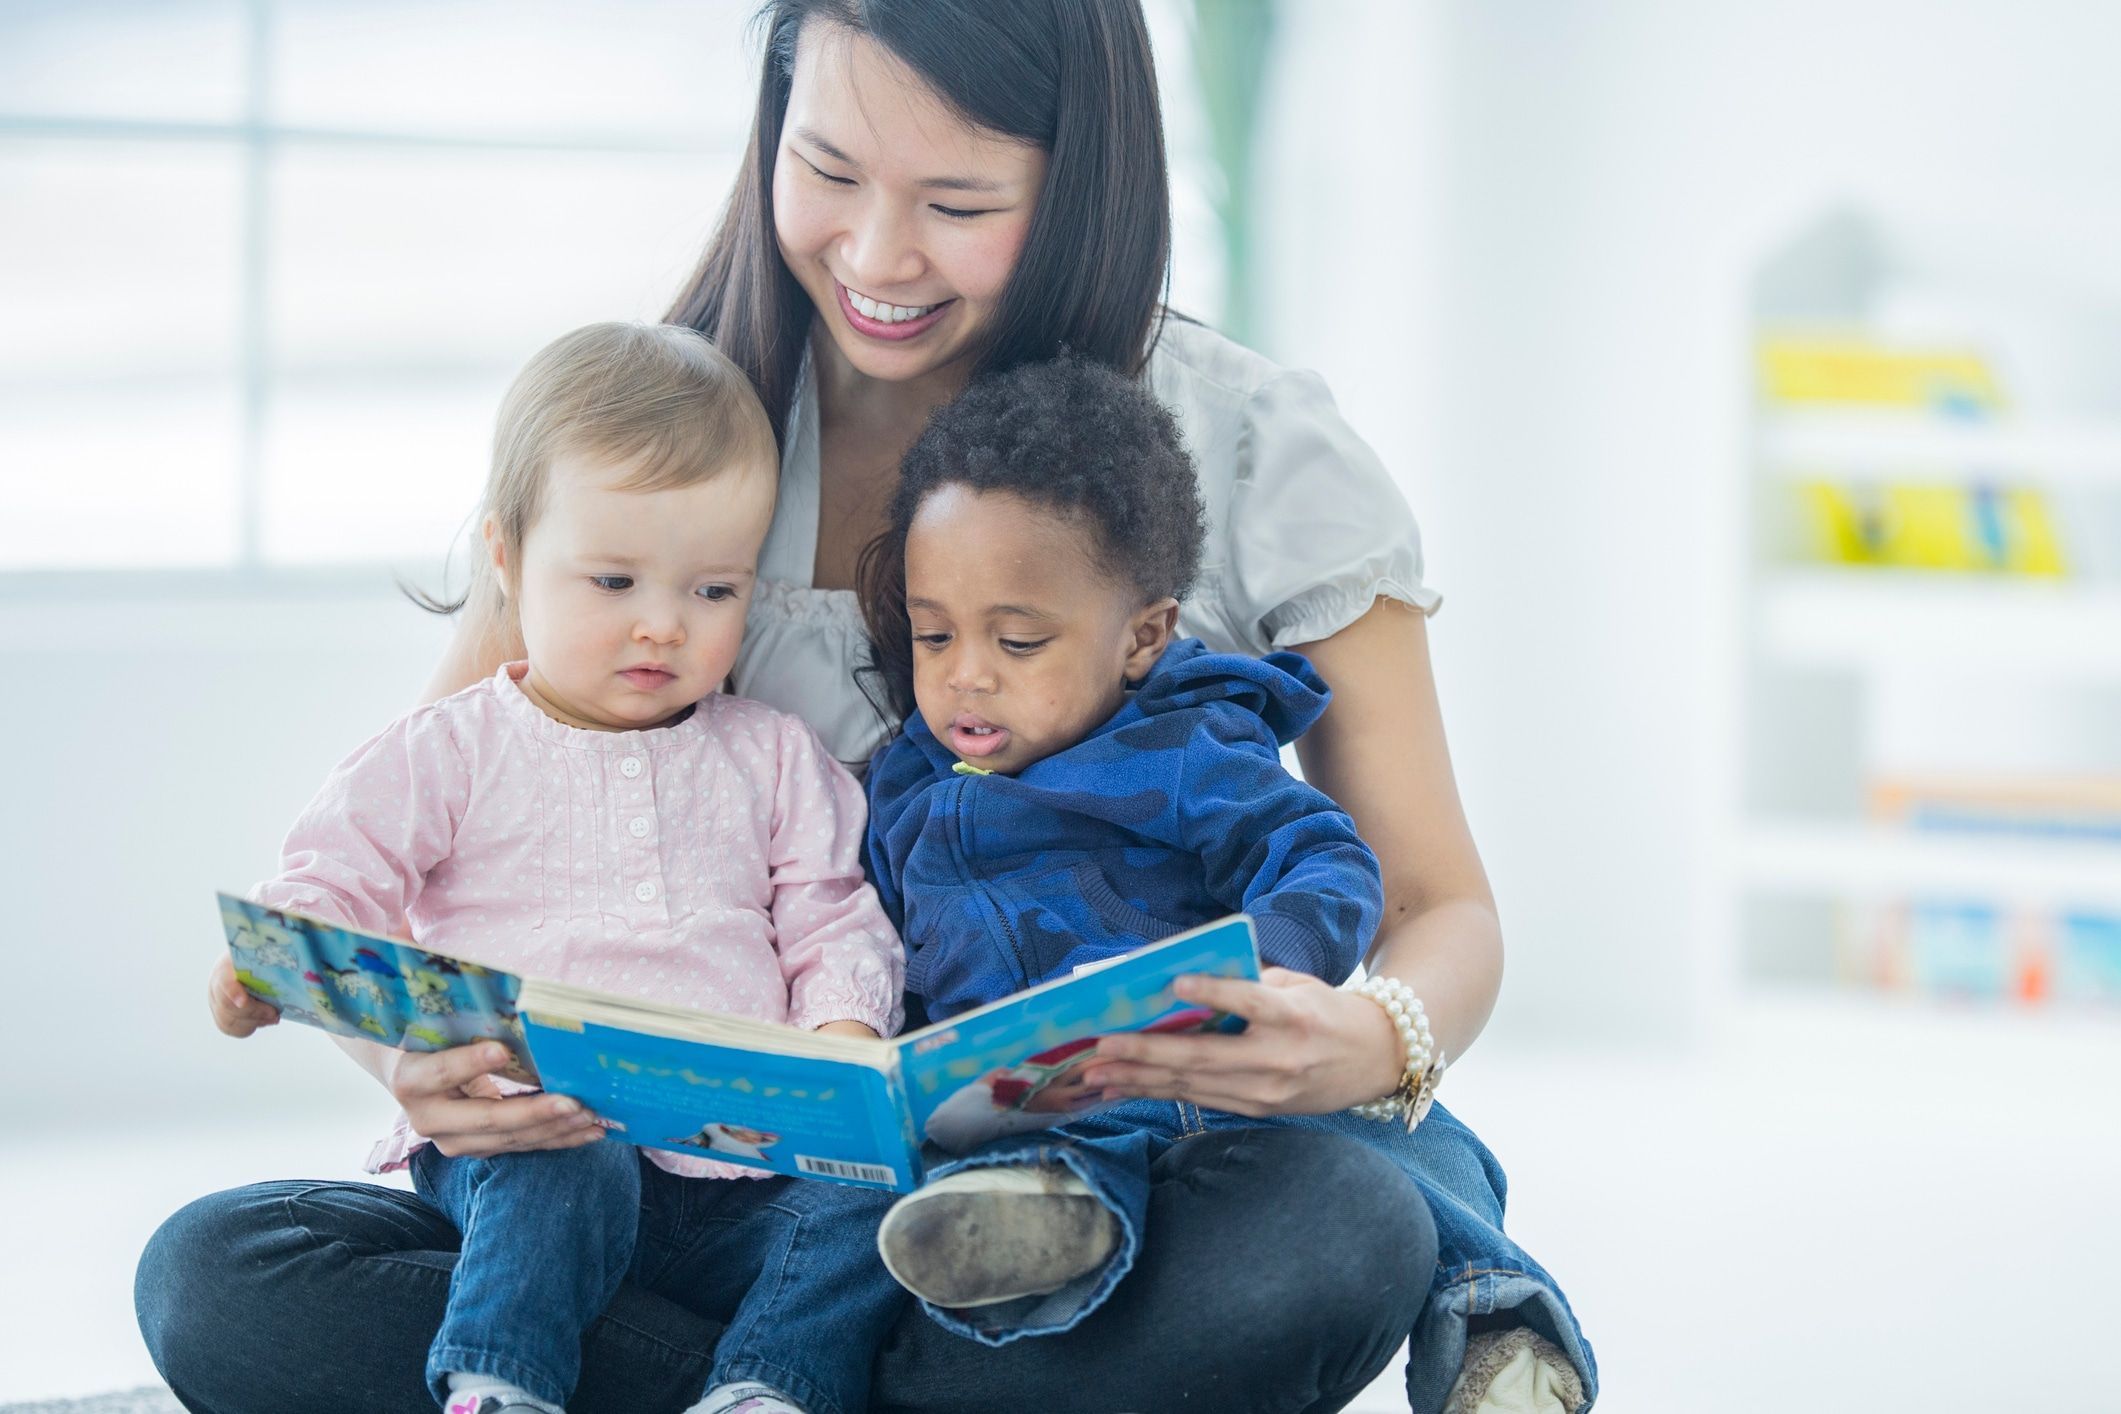 Nanny Share Program - Safe At Home Child Care